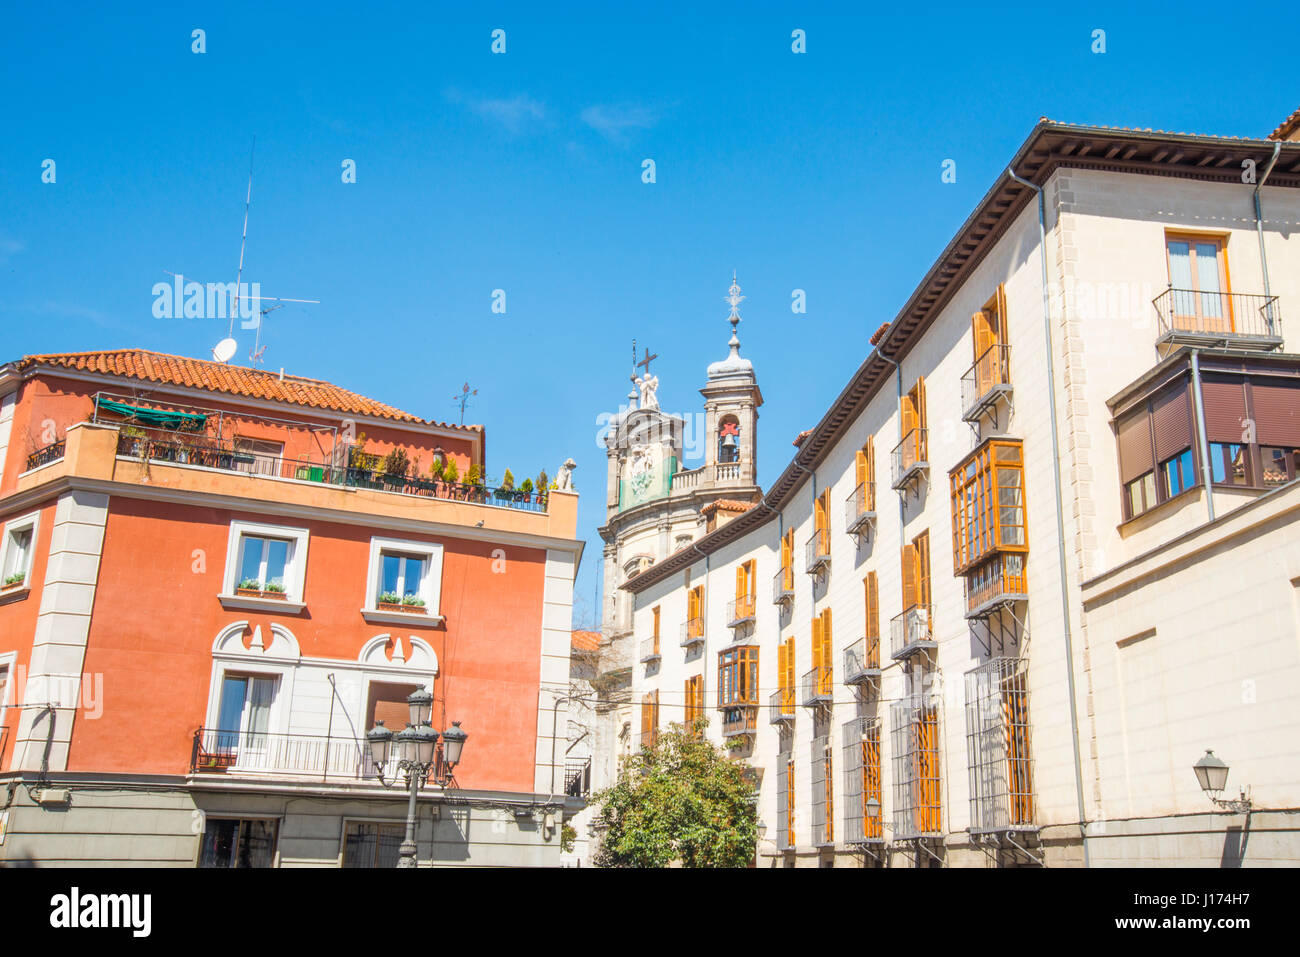 Facades of houses. Austrias district, Madrid, Spain. Stock Photo